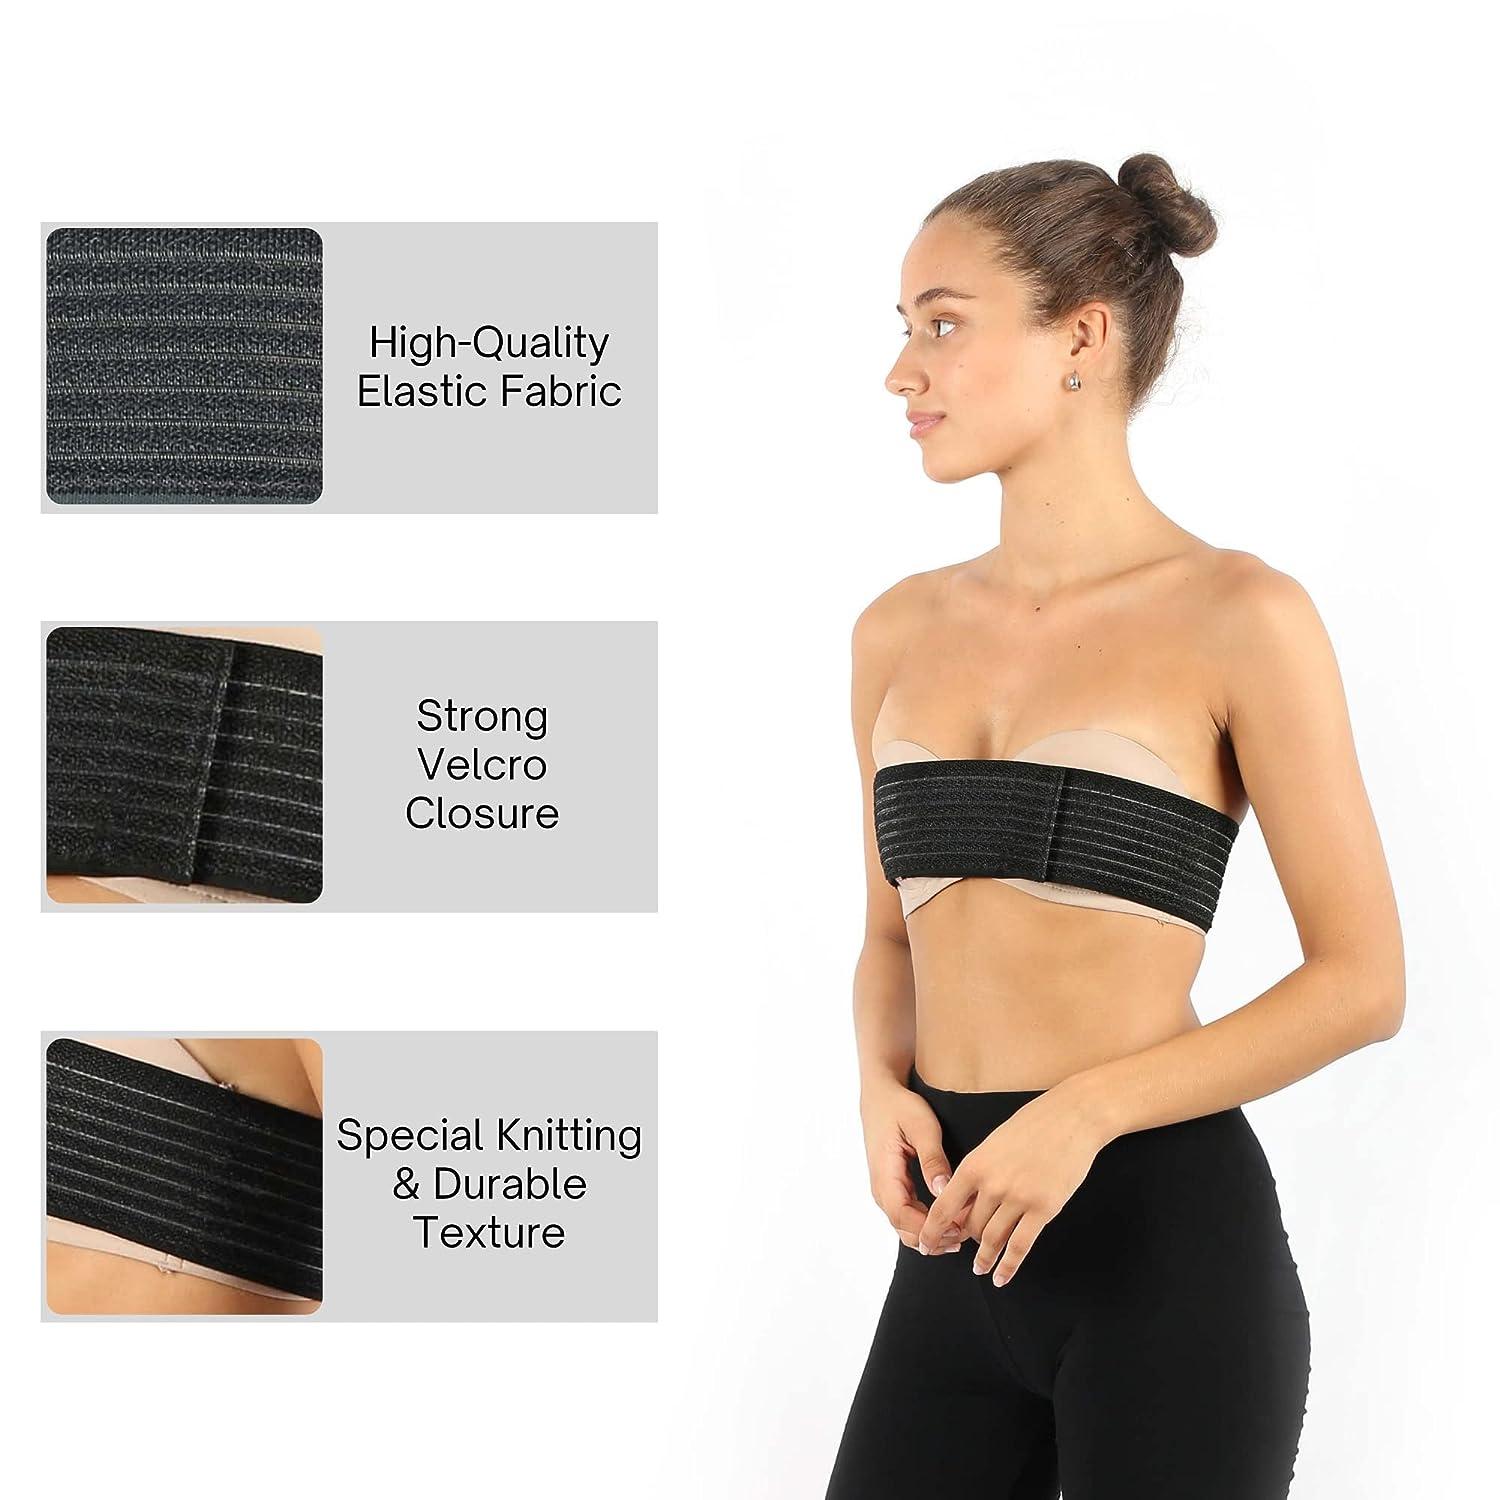 Flexible Silicone Women's Breast Binder Belt Elastic Breast